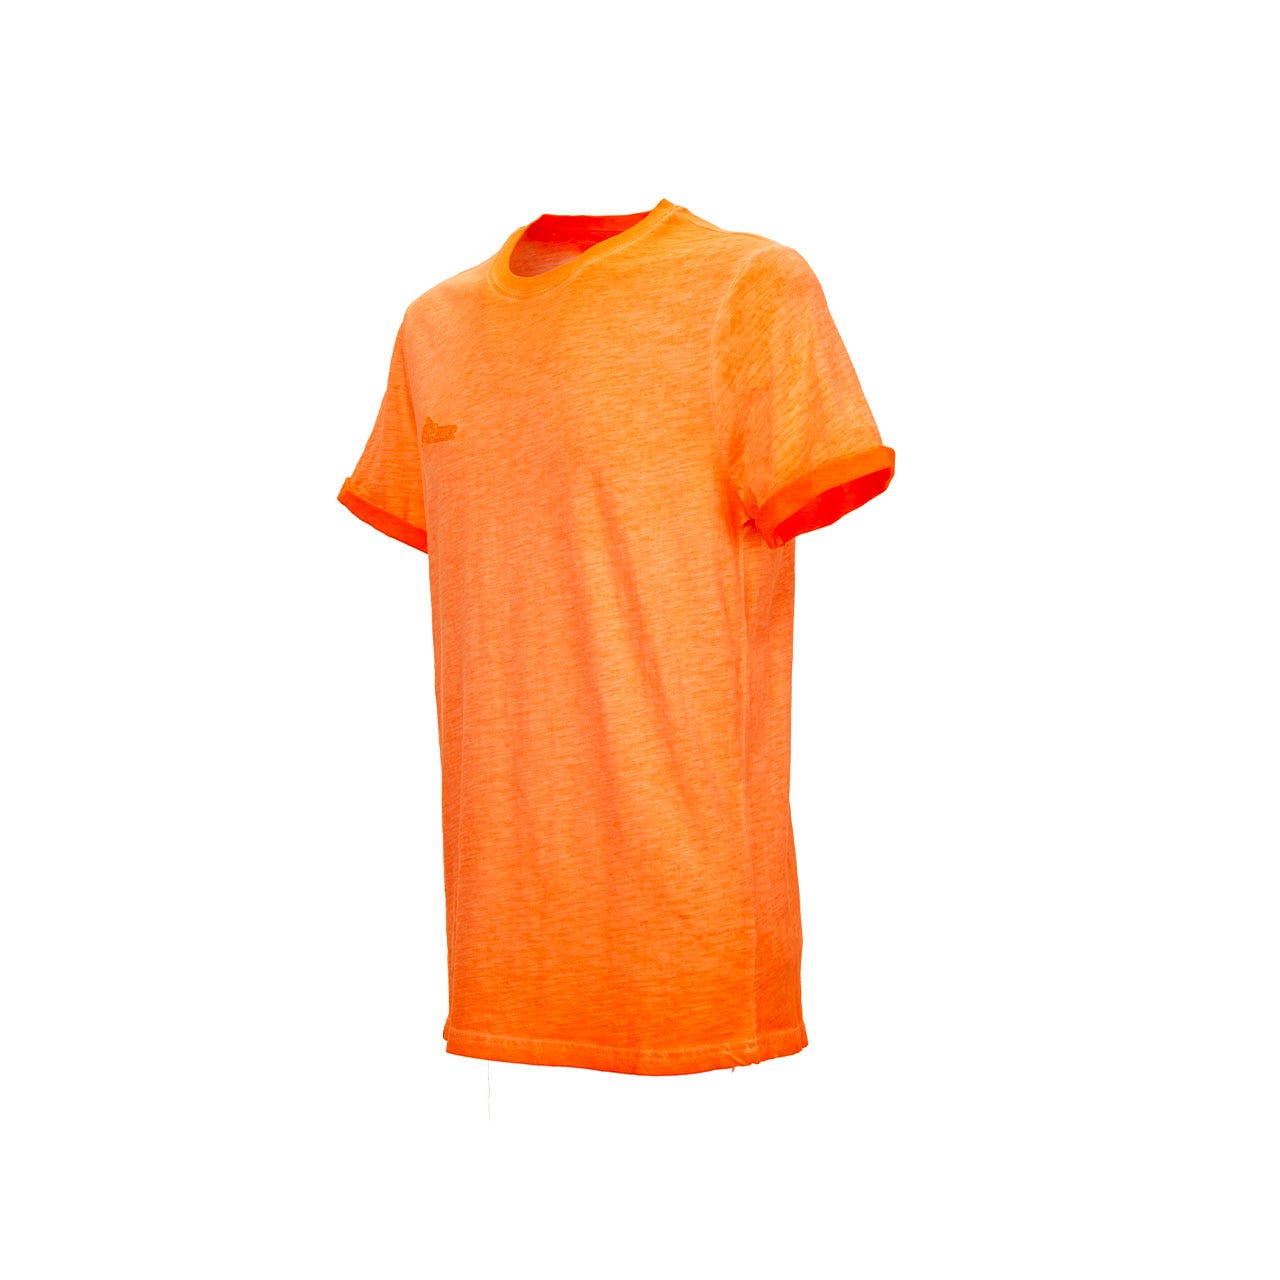 Tee-shirt manche courte FLUO Orange Fluo (Lot de 3) | EY195OF - Upower 2